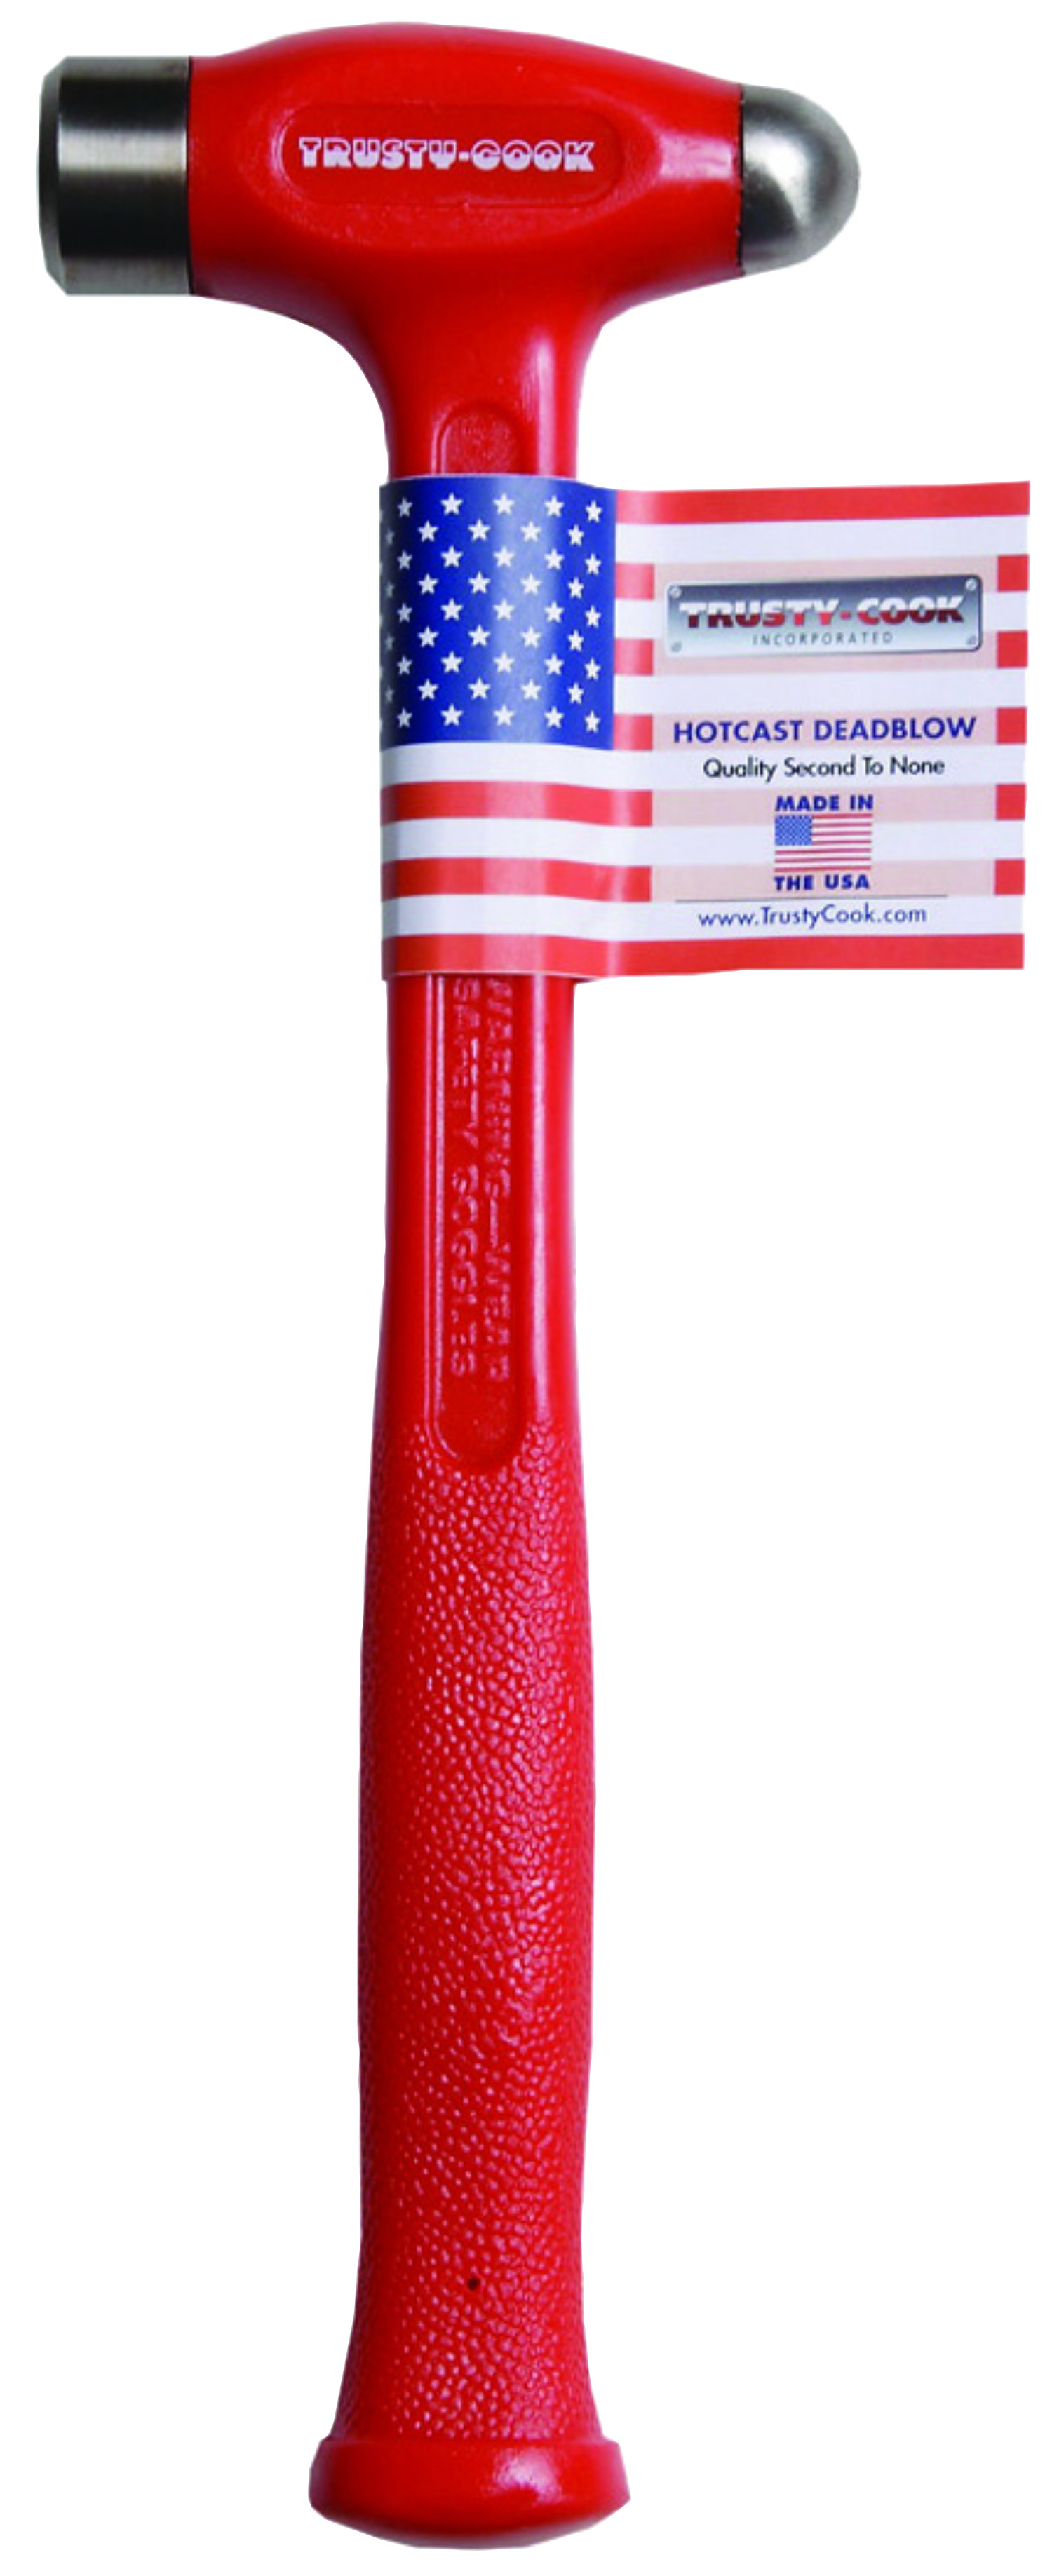 26 oz. Ball Peen Polyurethane Dead Blow Hammer, Red - Made in USA